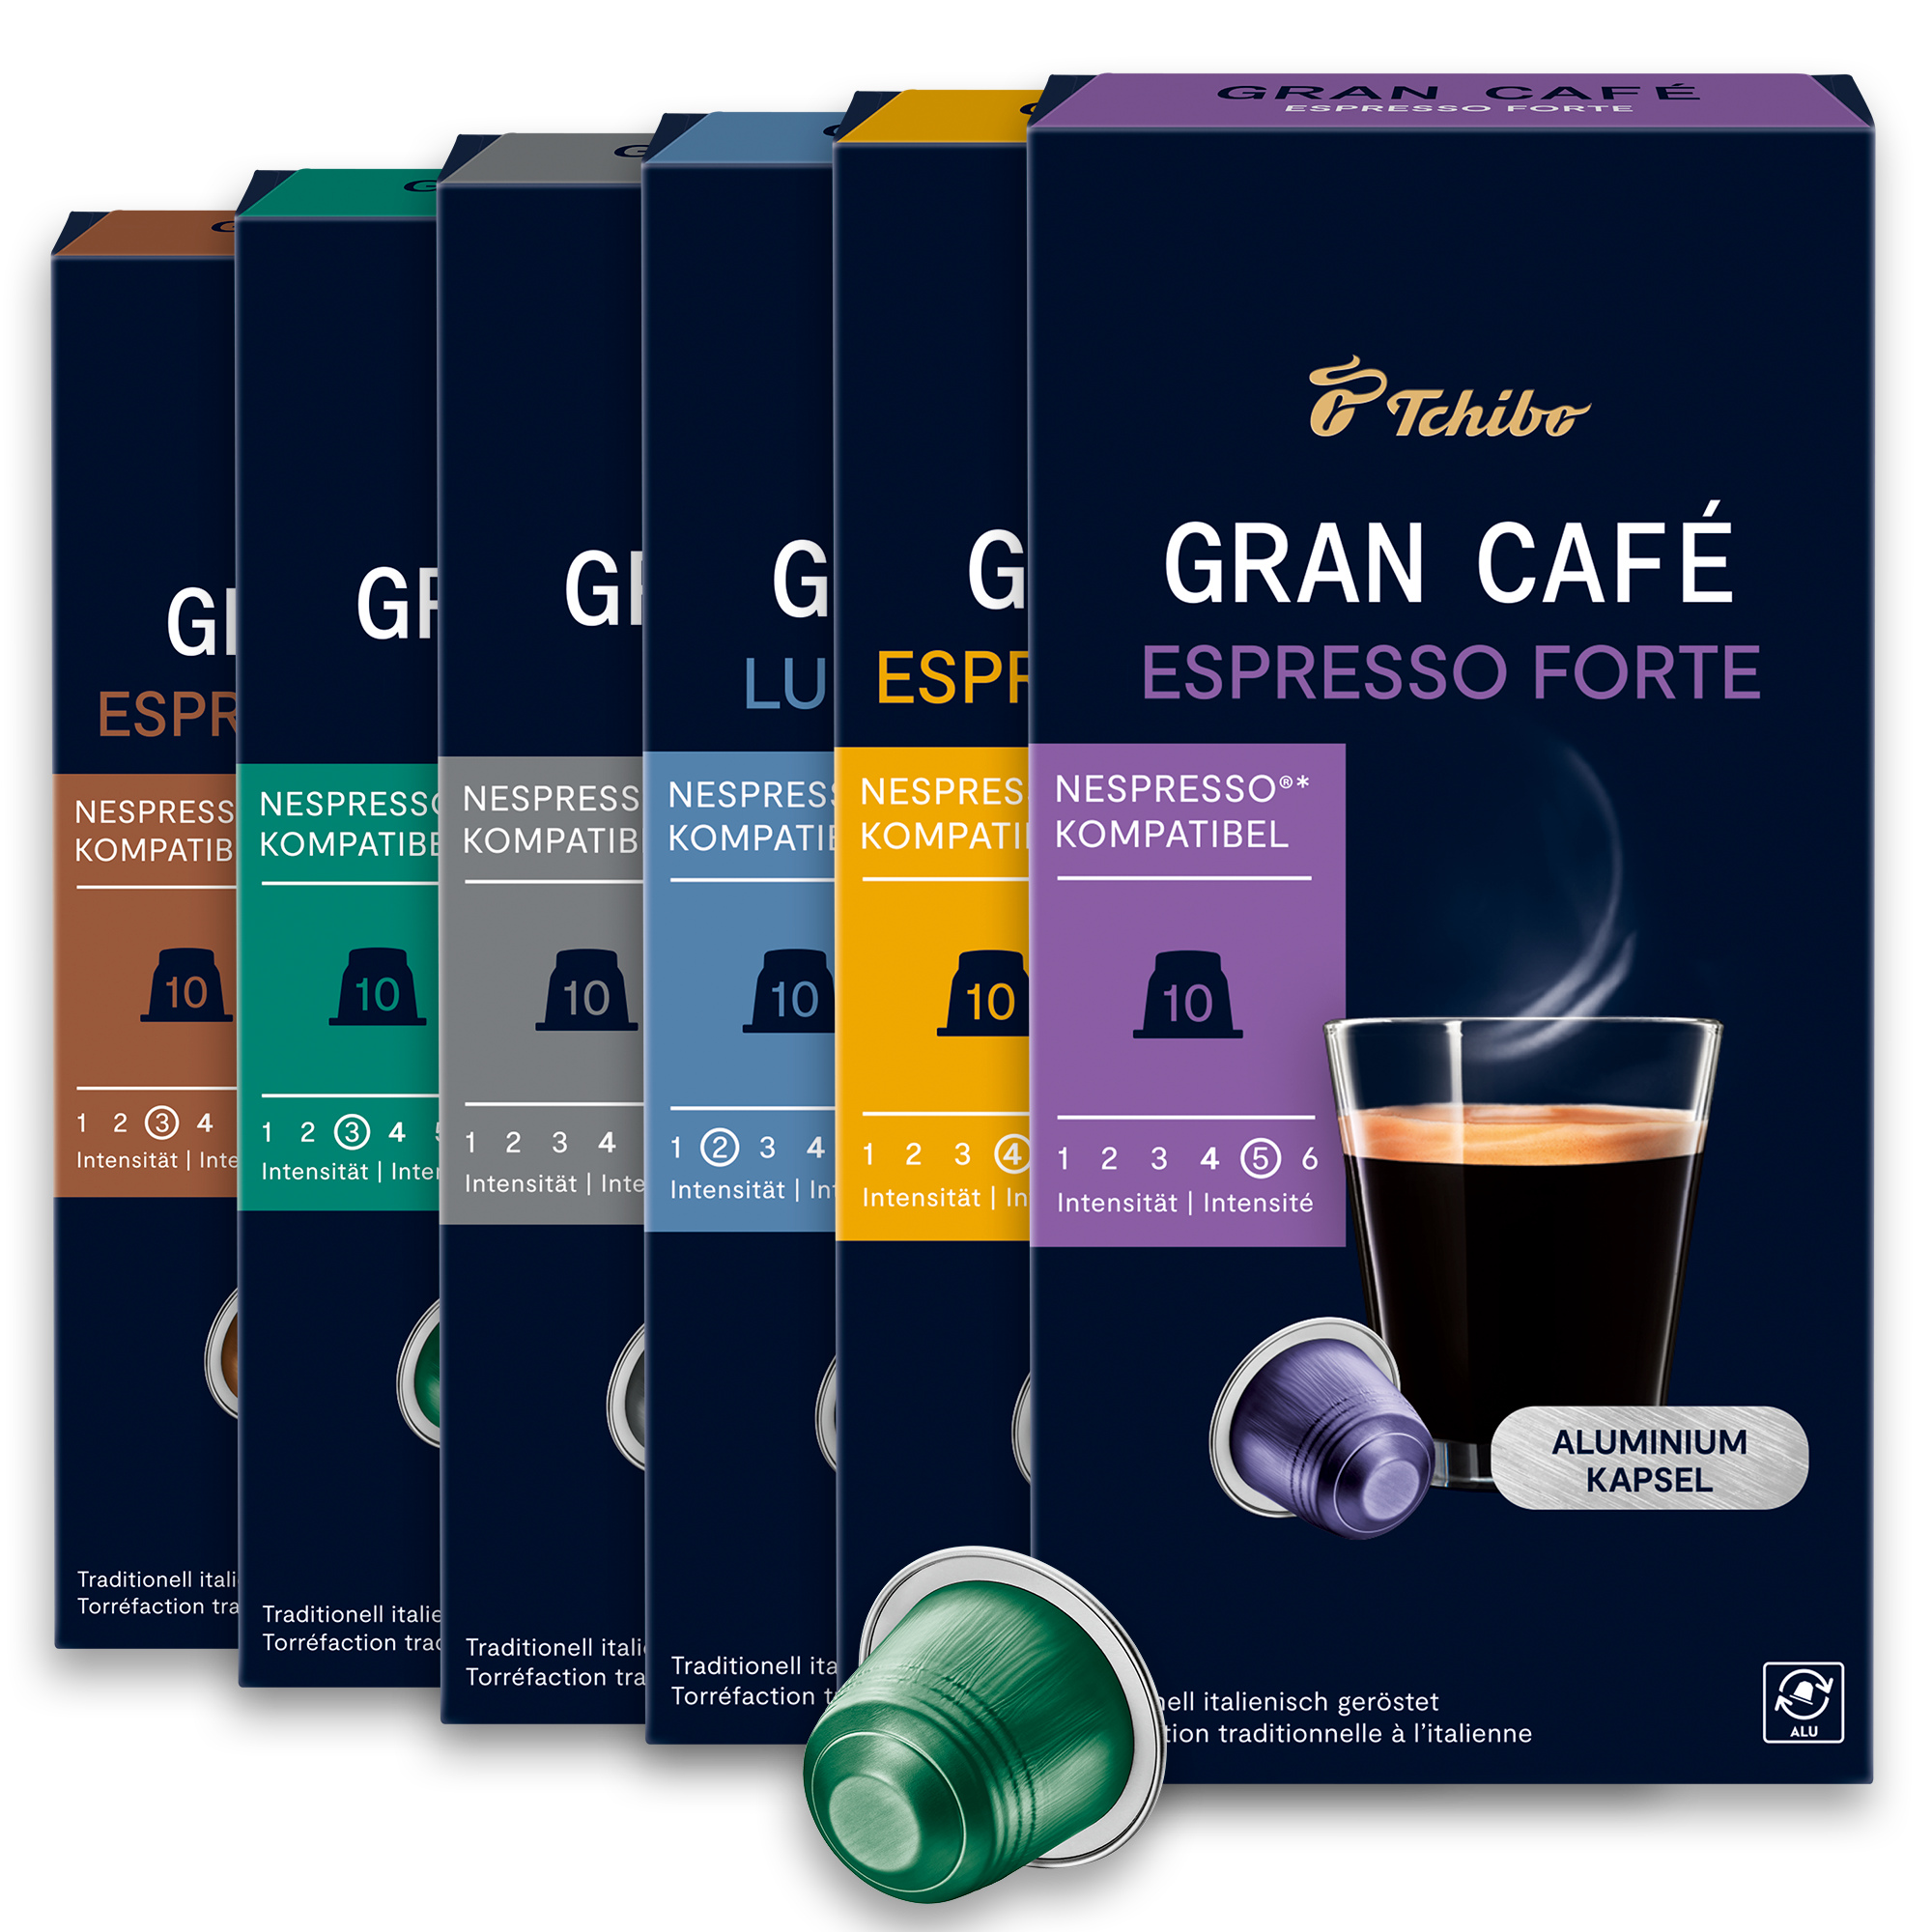 Gran Café Variety Pack - the best coffee quality for your Nespresso®*  original machine